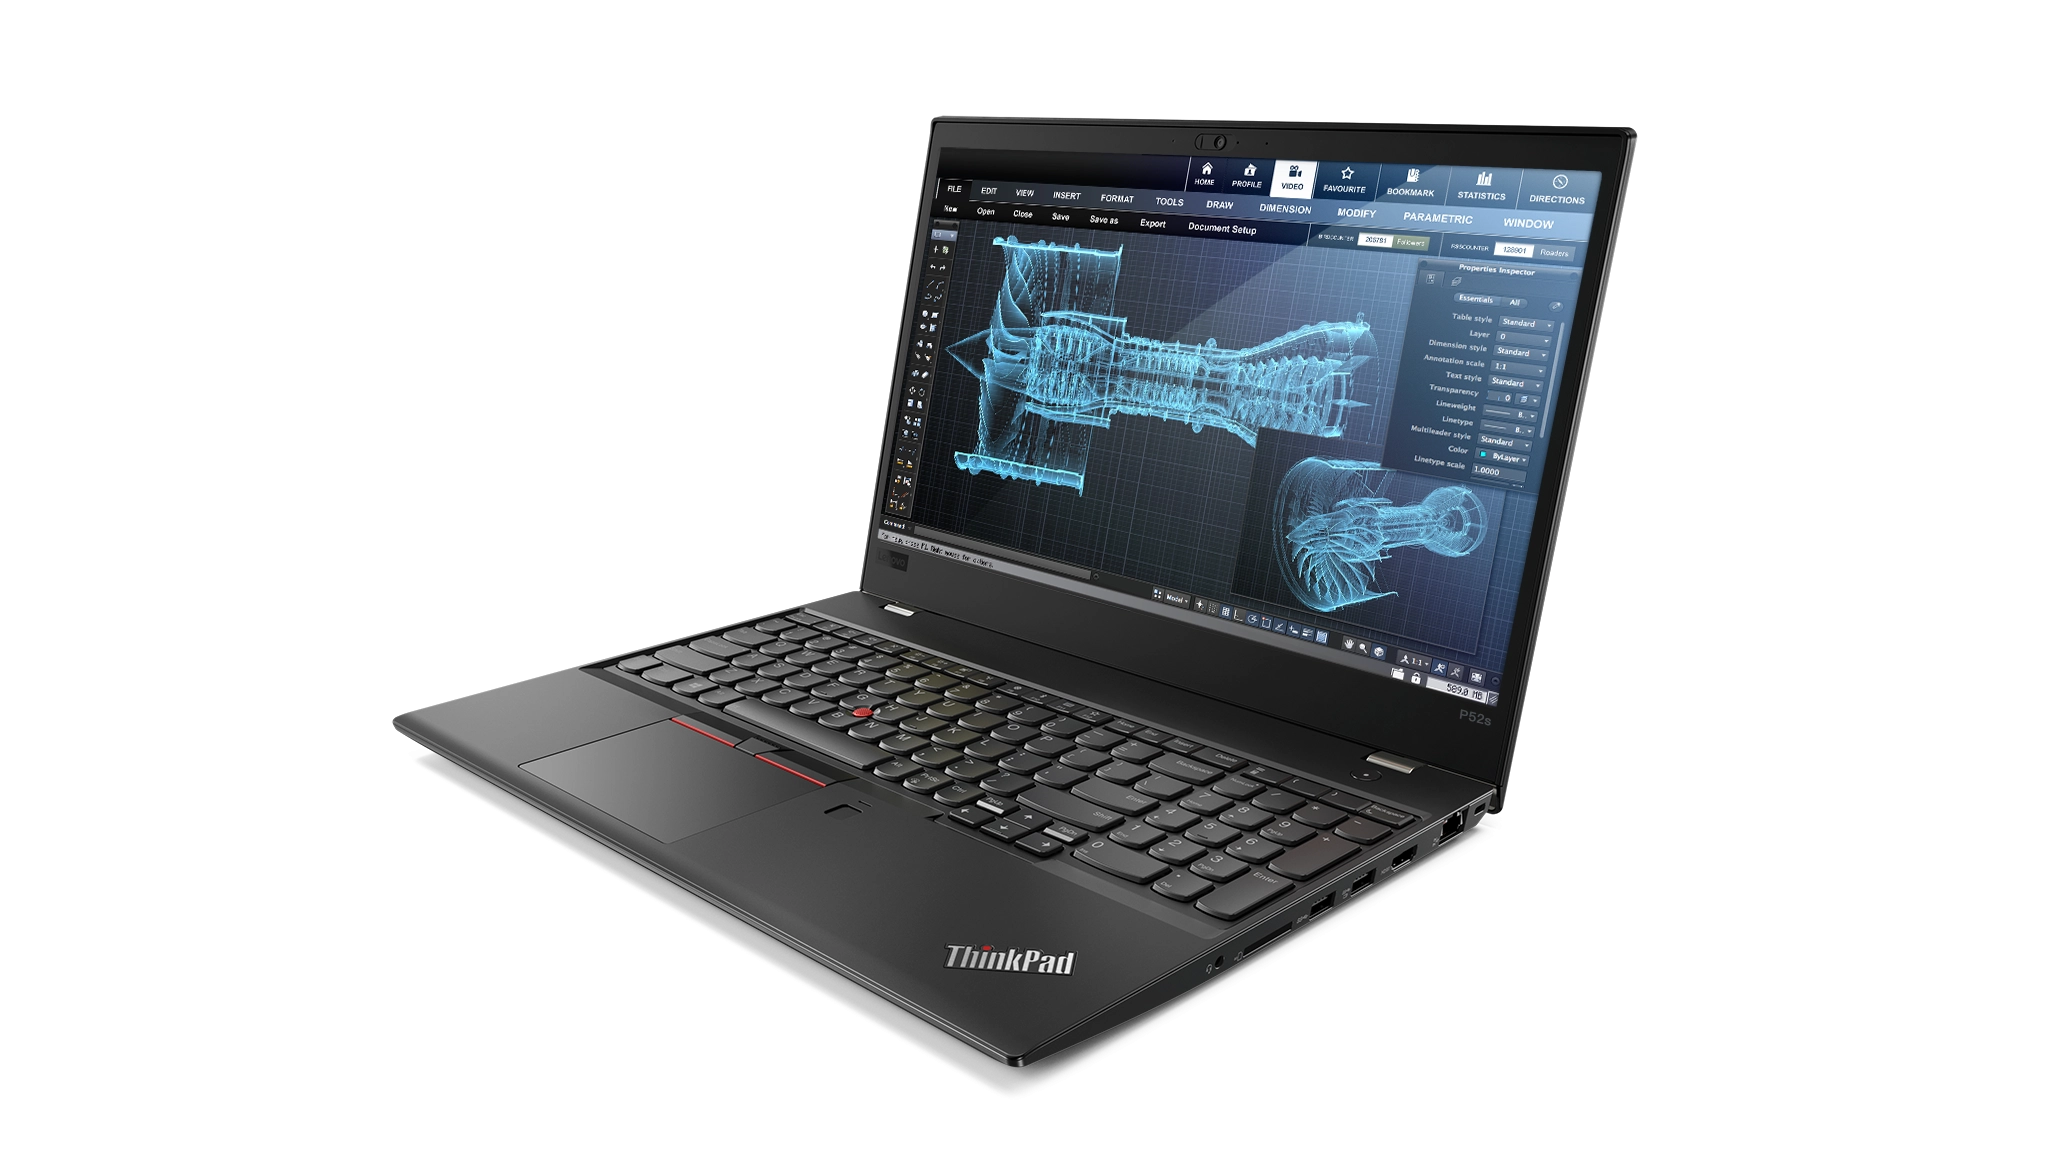 Lenovo ThinkPad P52s laptop image